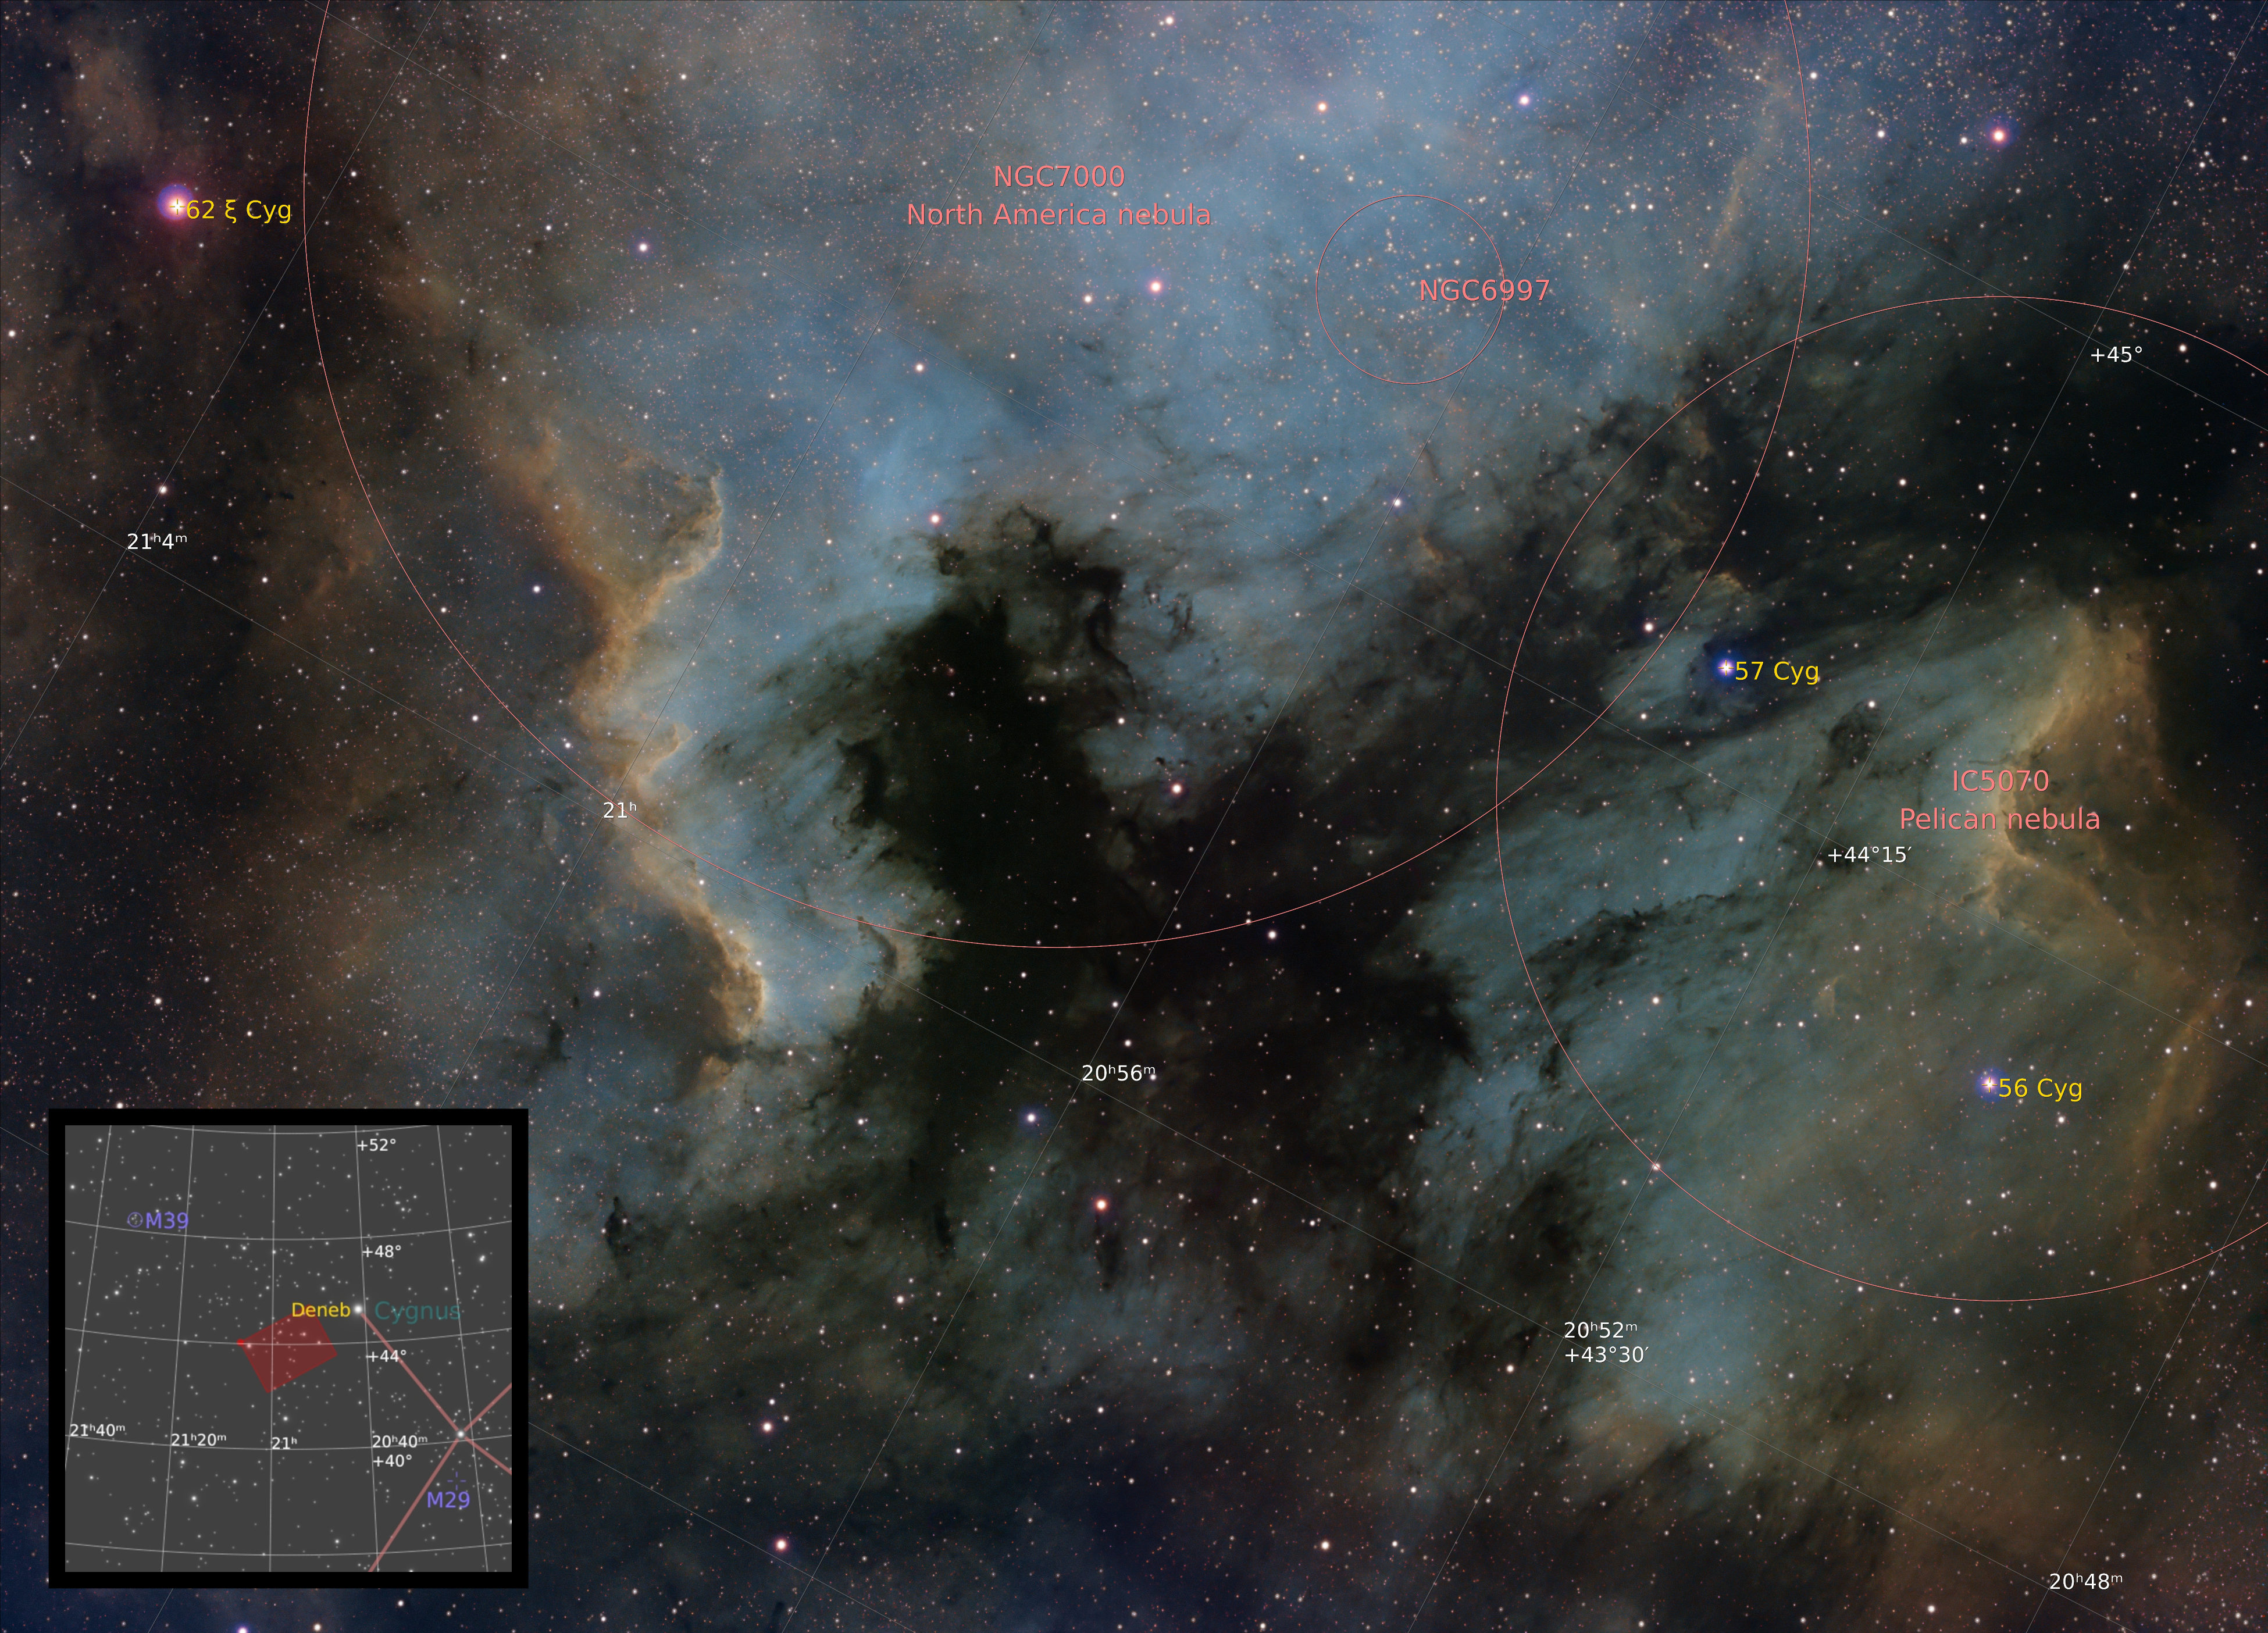 North America Nebula, narrowband, annotated)